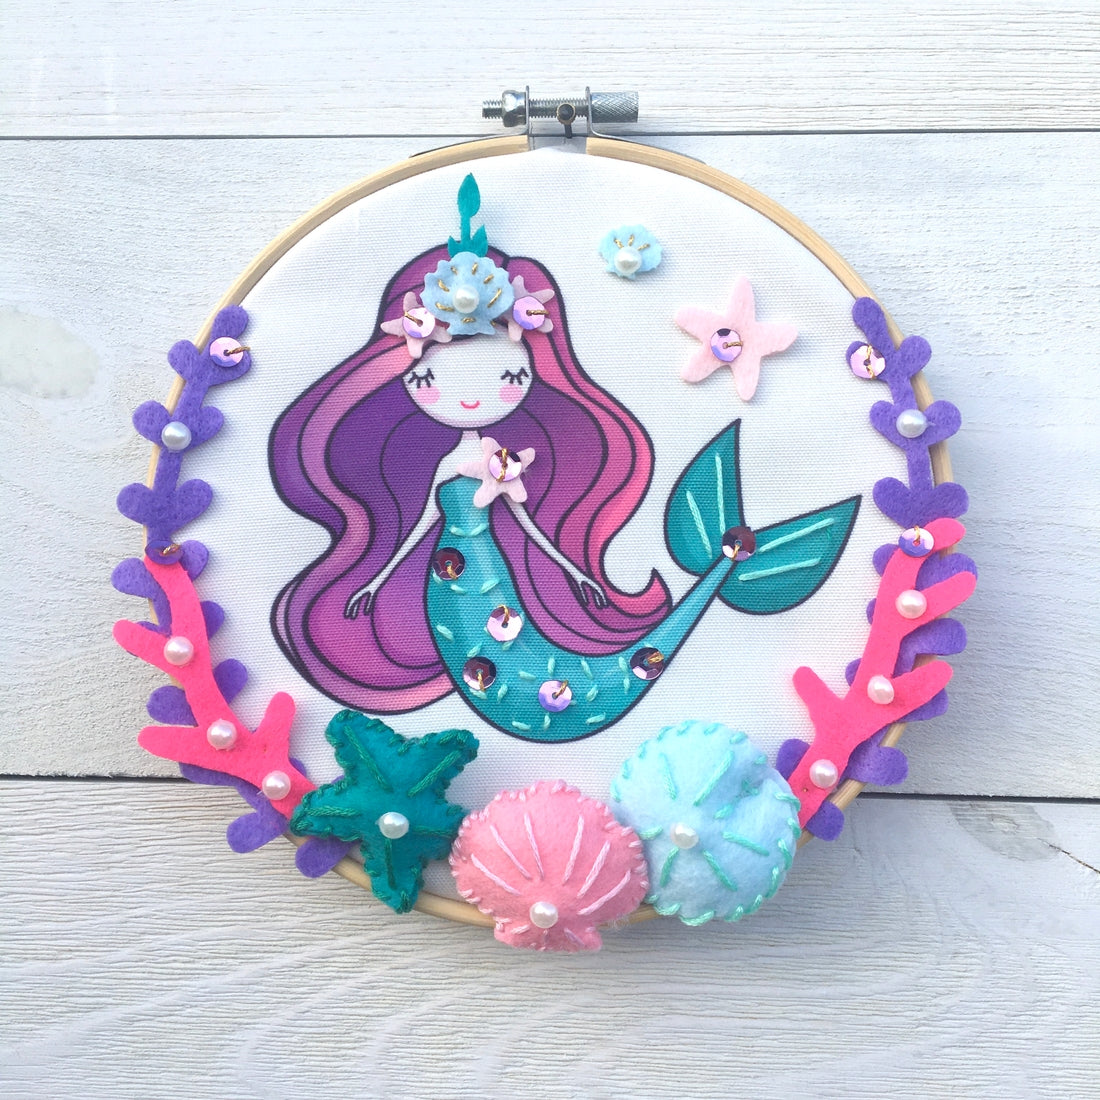 Mermaid Embroidery Kit for Children